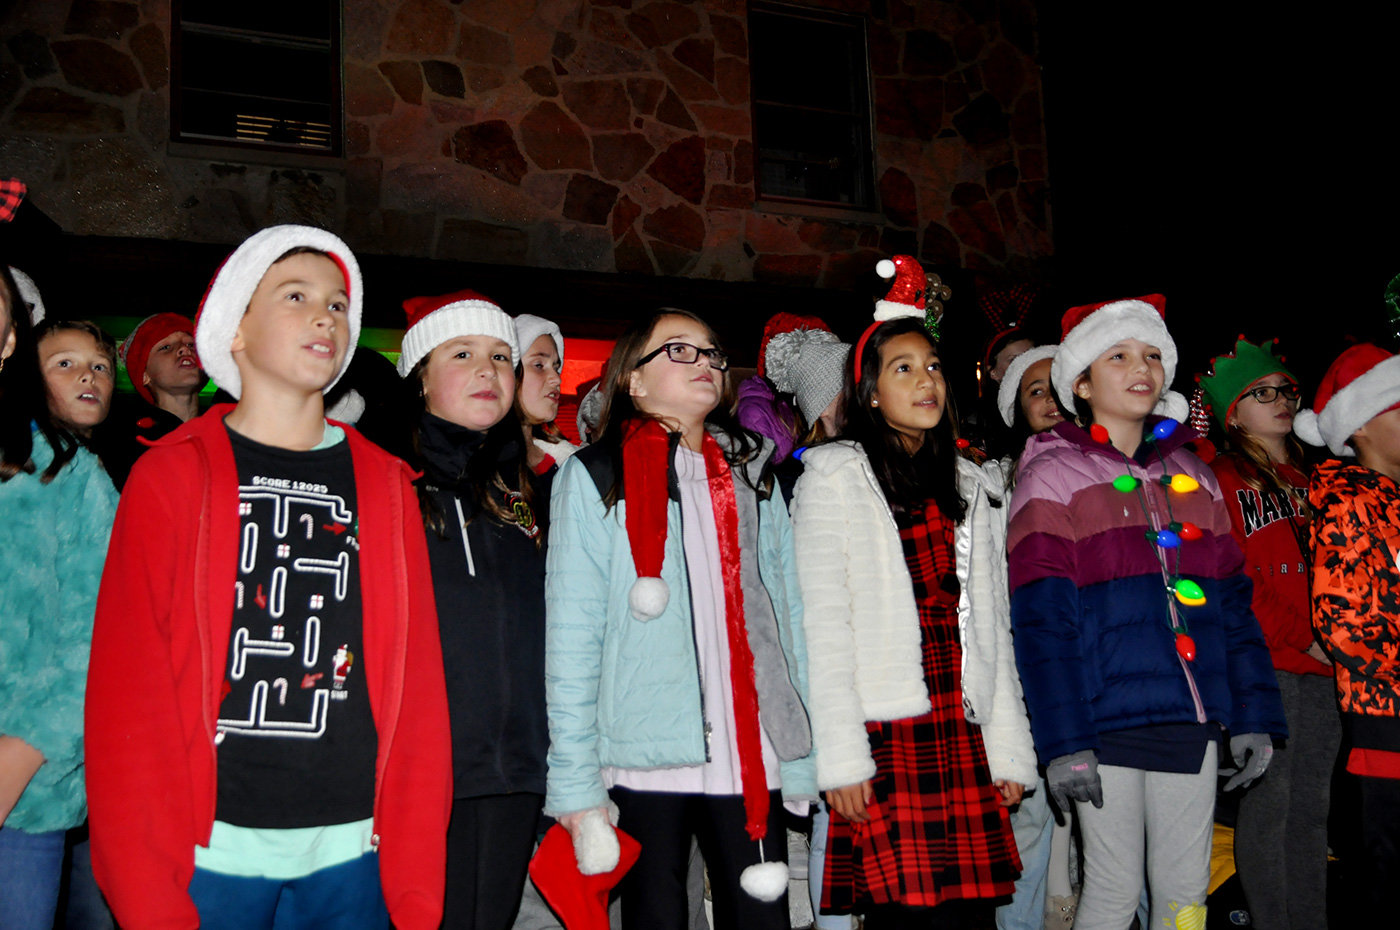 Severna Park Elementary School’s fifth-grade chorus sang three Christmas tunes for the crowd on December 2.